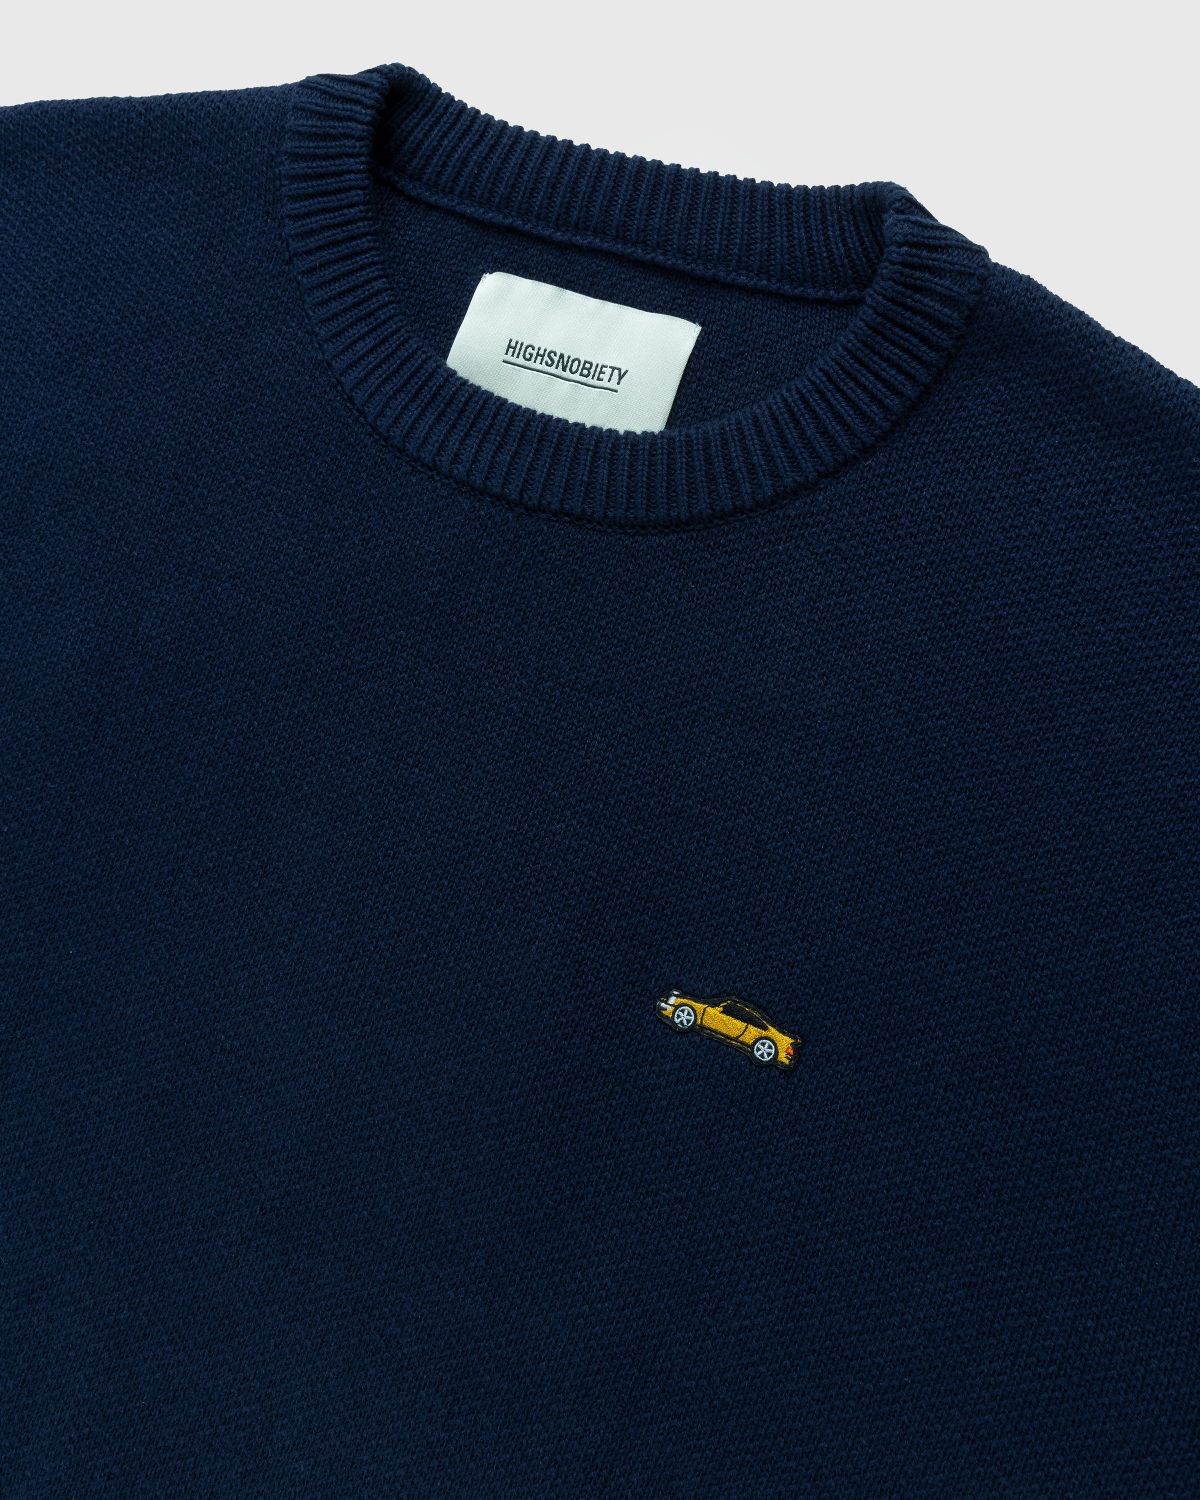 RUF x Highsnobiety – Knitted Crewneck Sweater Navy - Knitwear - Blue - Image 4